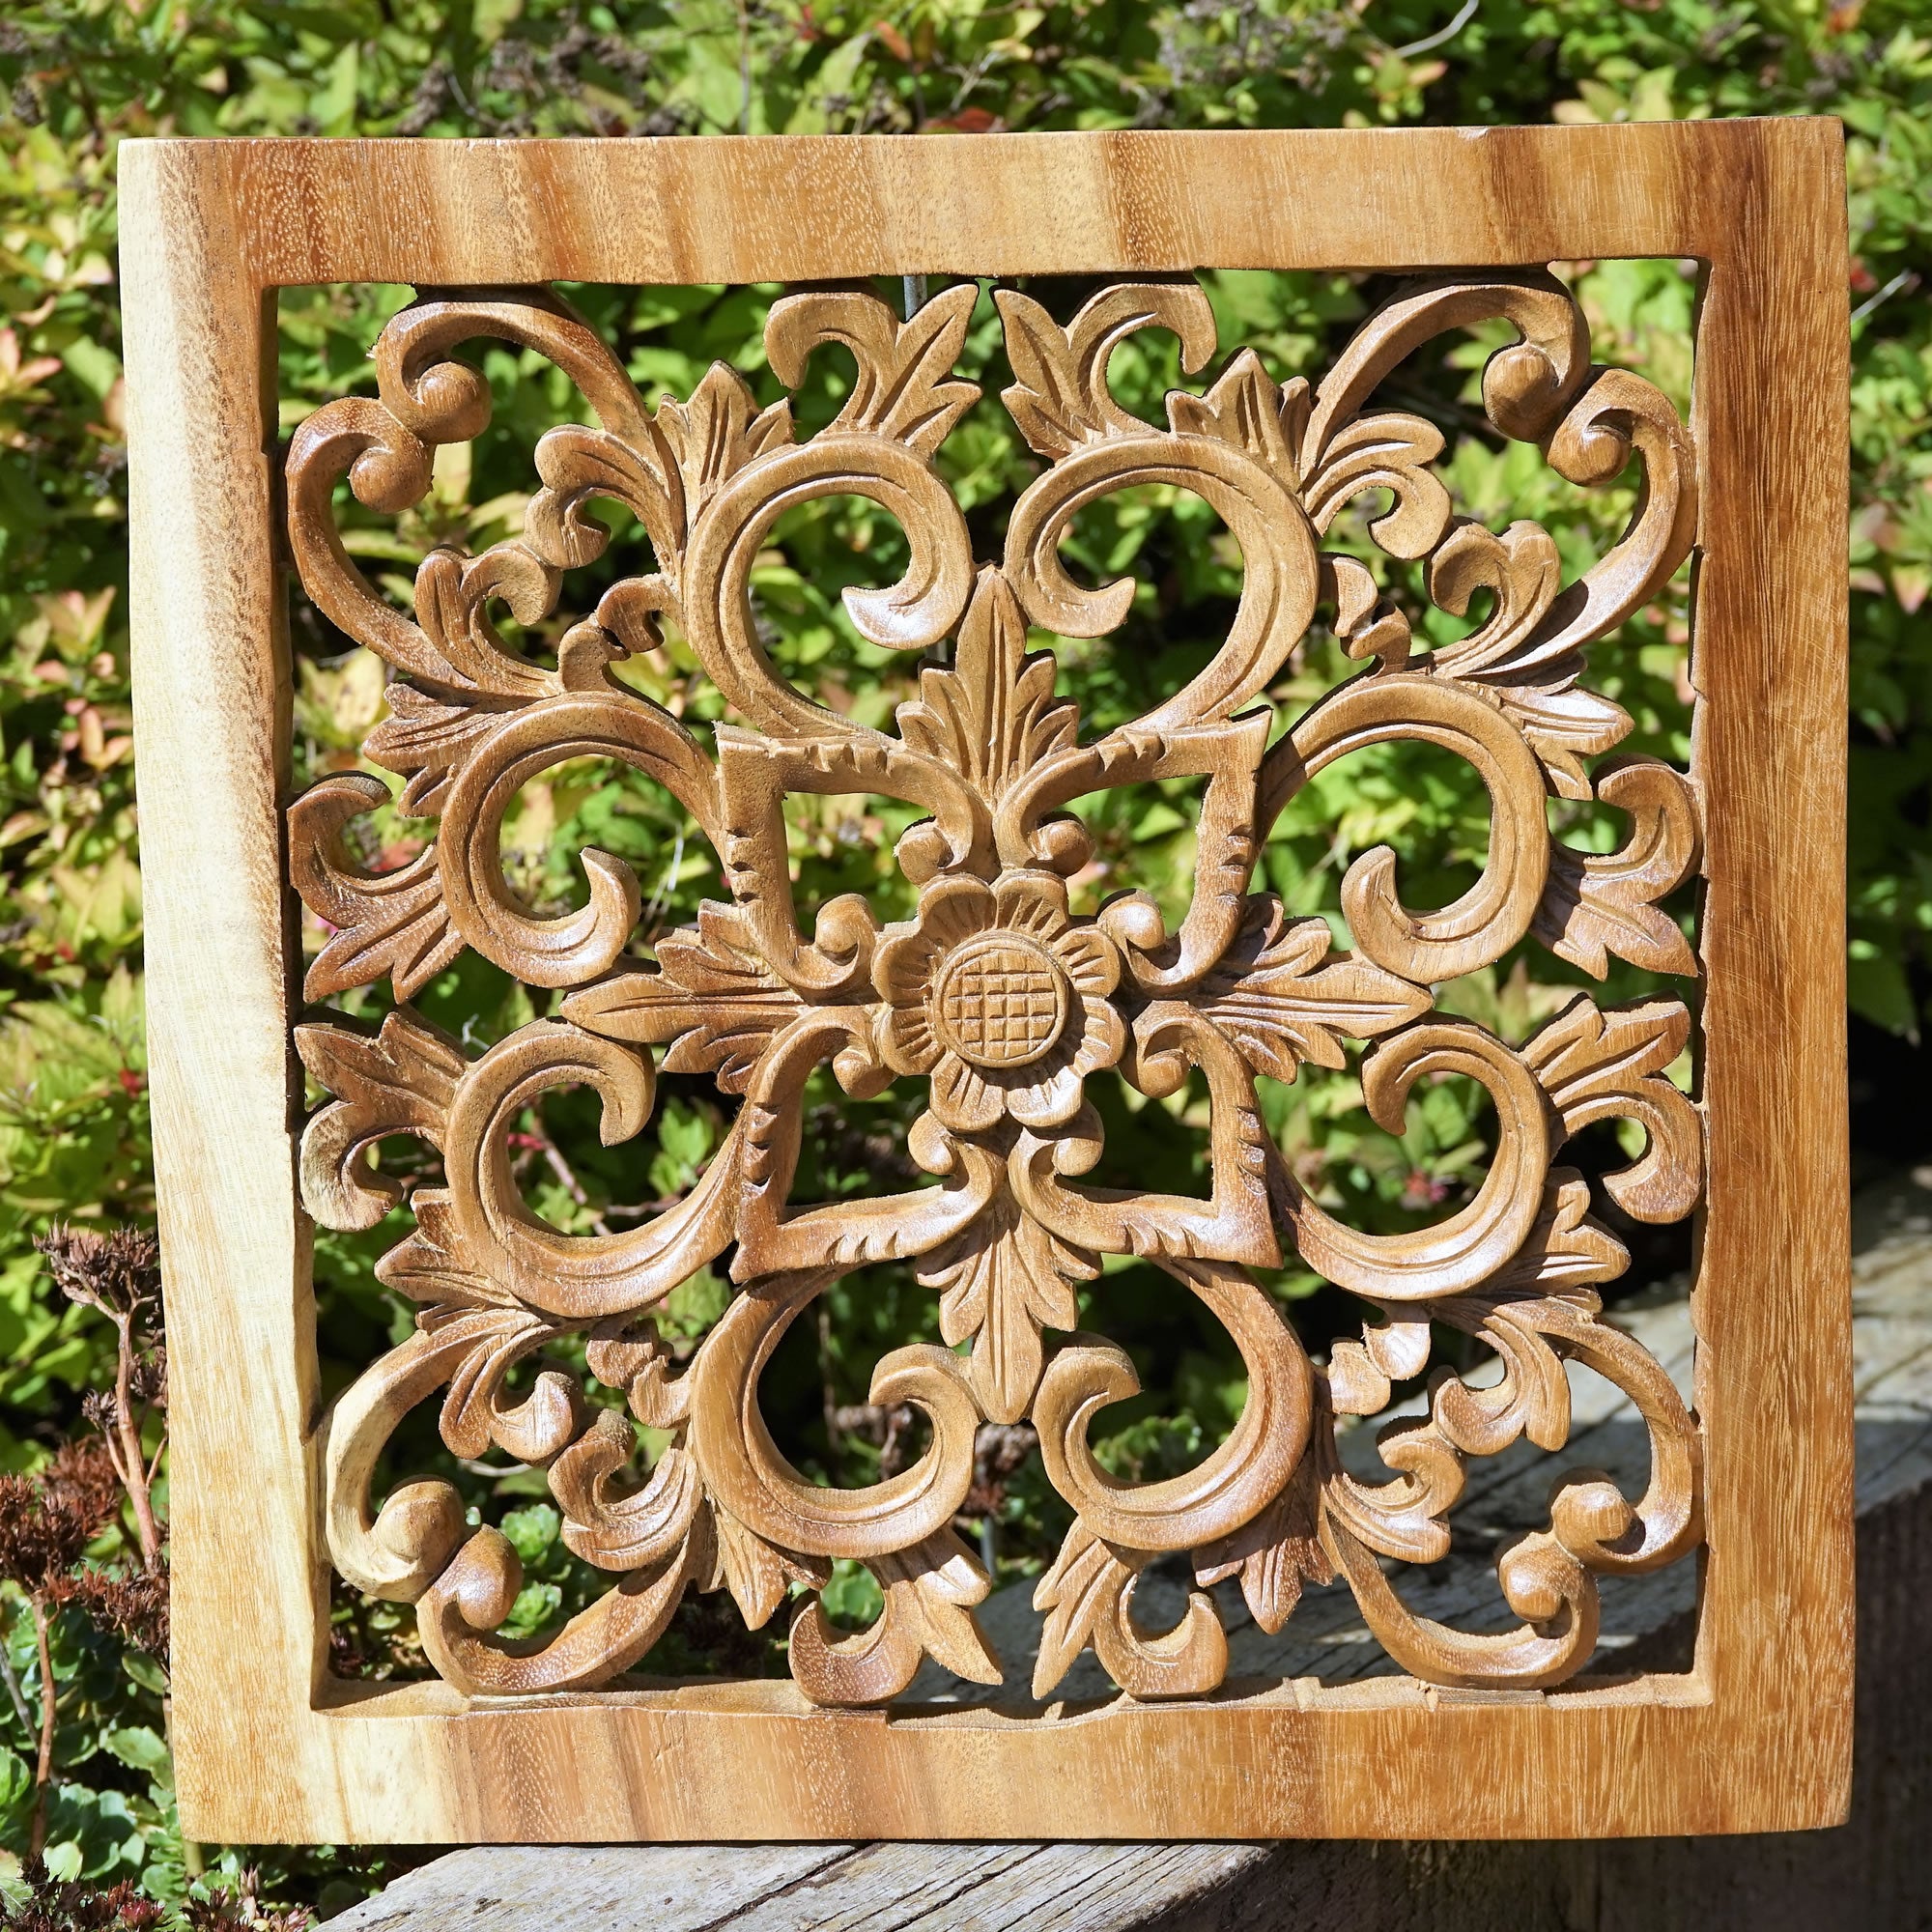 Handmade Carved Wooden Decorative Mandala Wall Art Sculpture Yoga Panel - Easternada